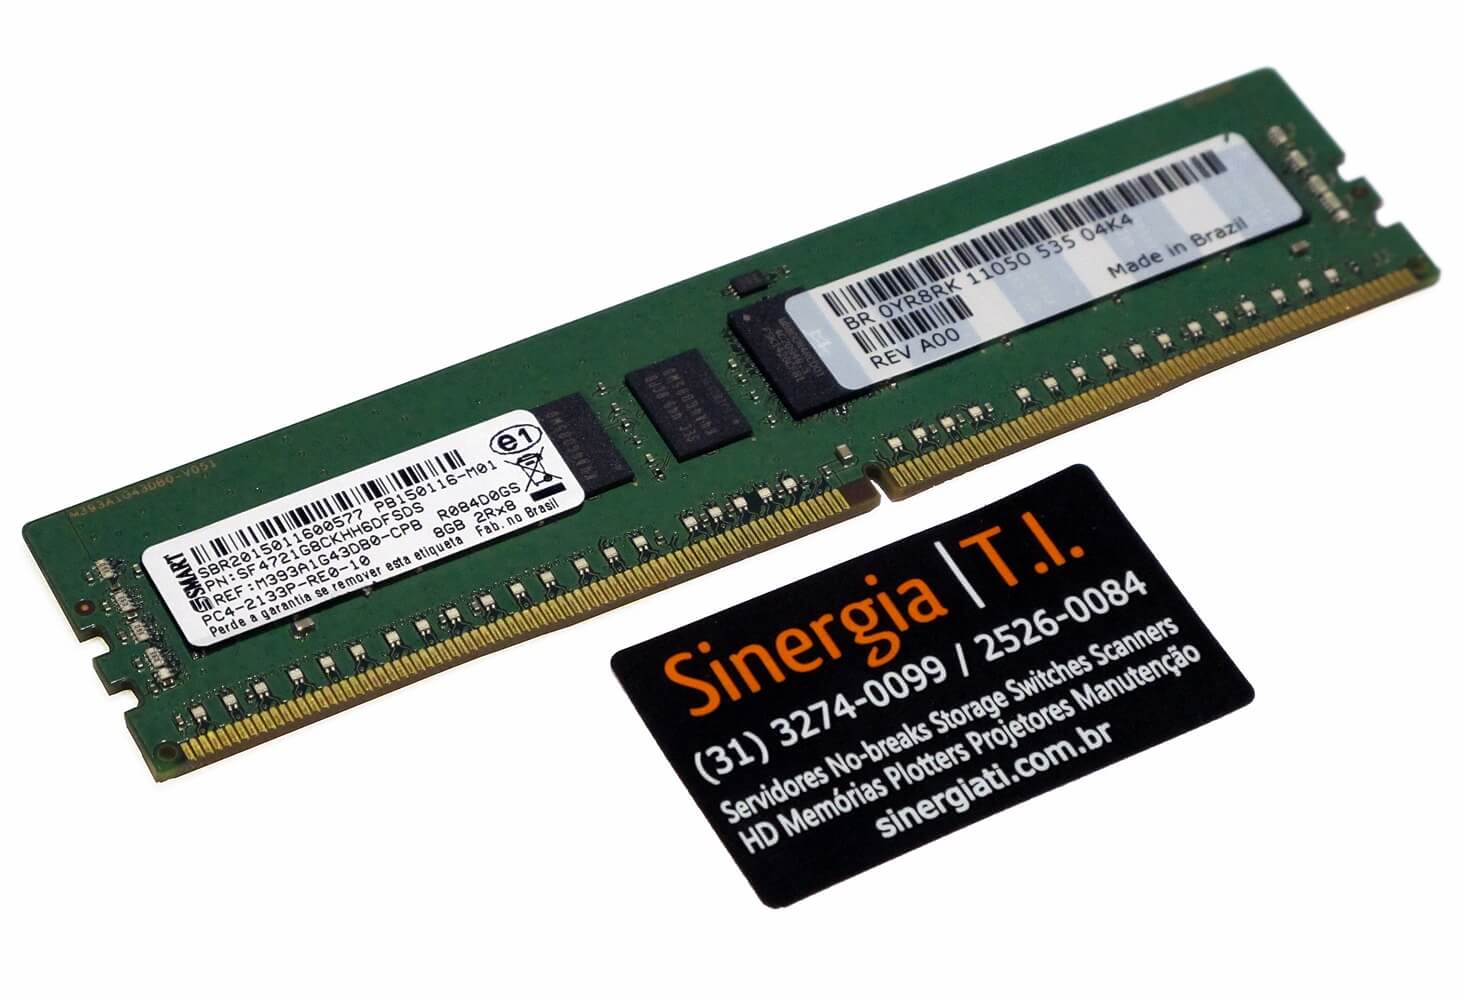 Memória RAM Dell 8GB para Precision T5810 XL Workstation PC4 2Rx8 DDR4 2133MHz pronta entrega